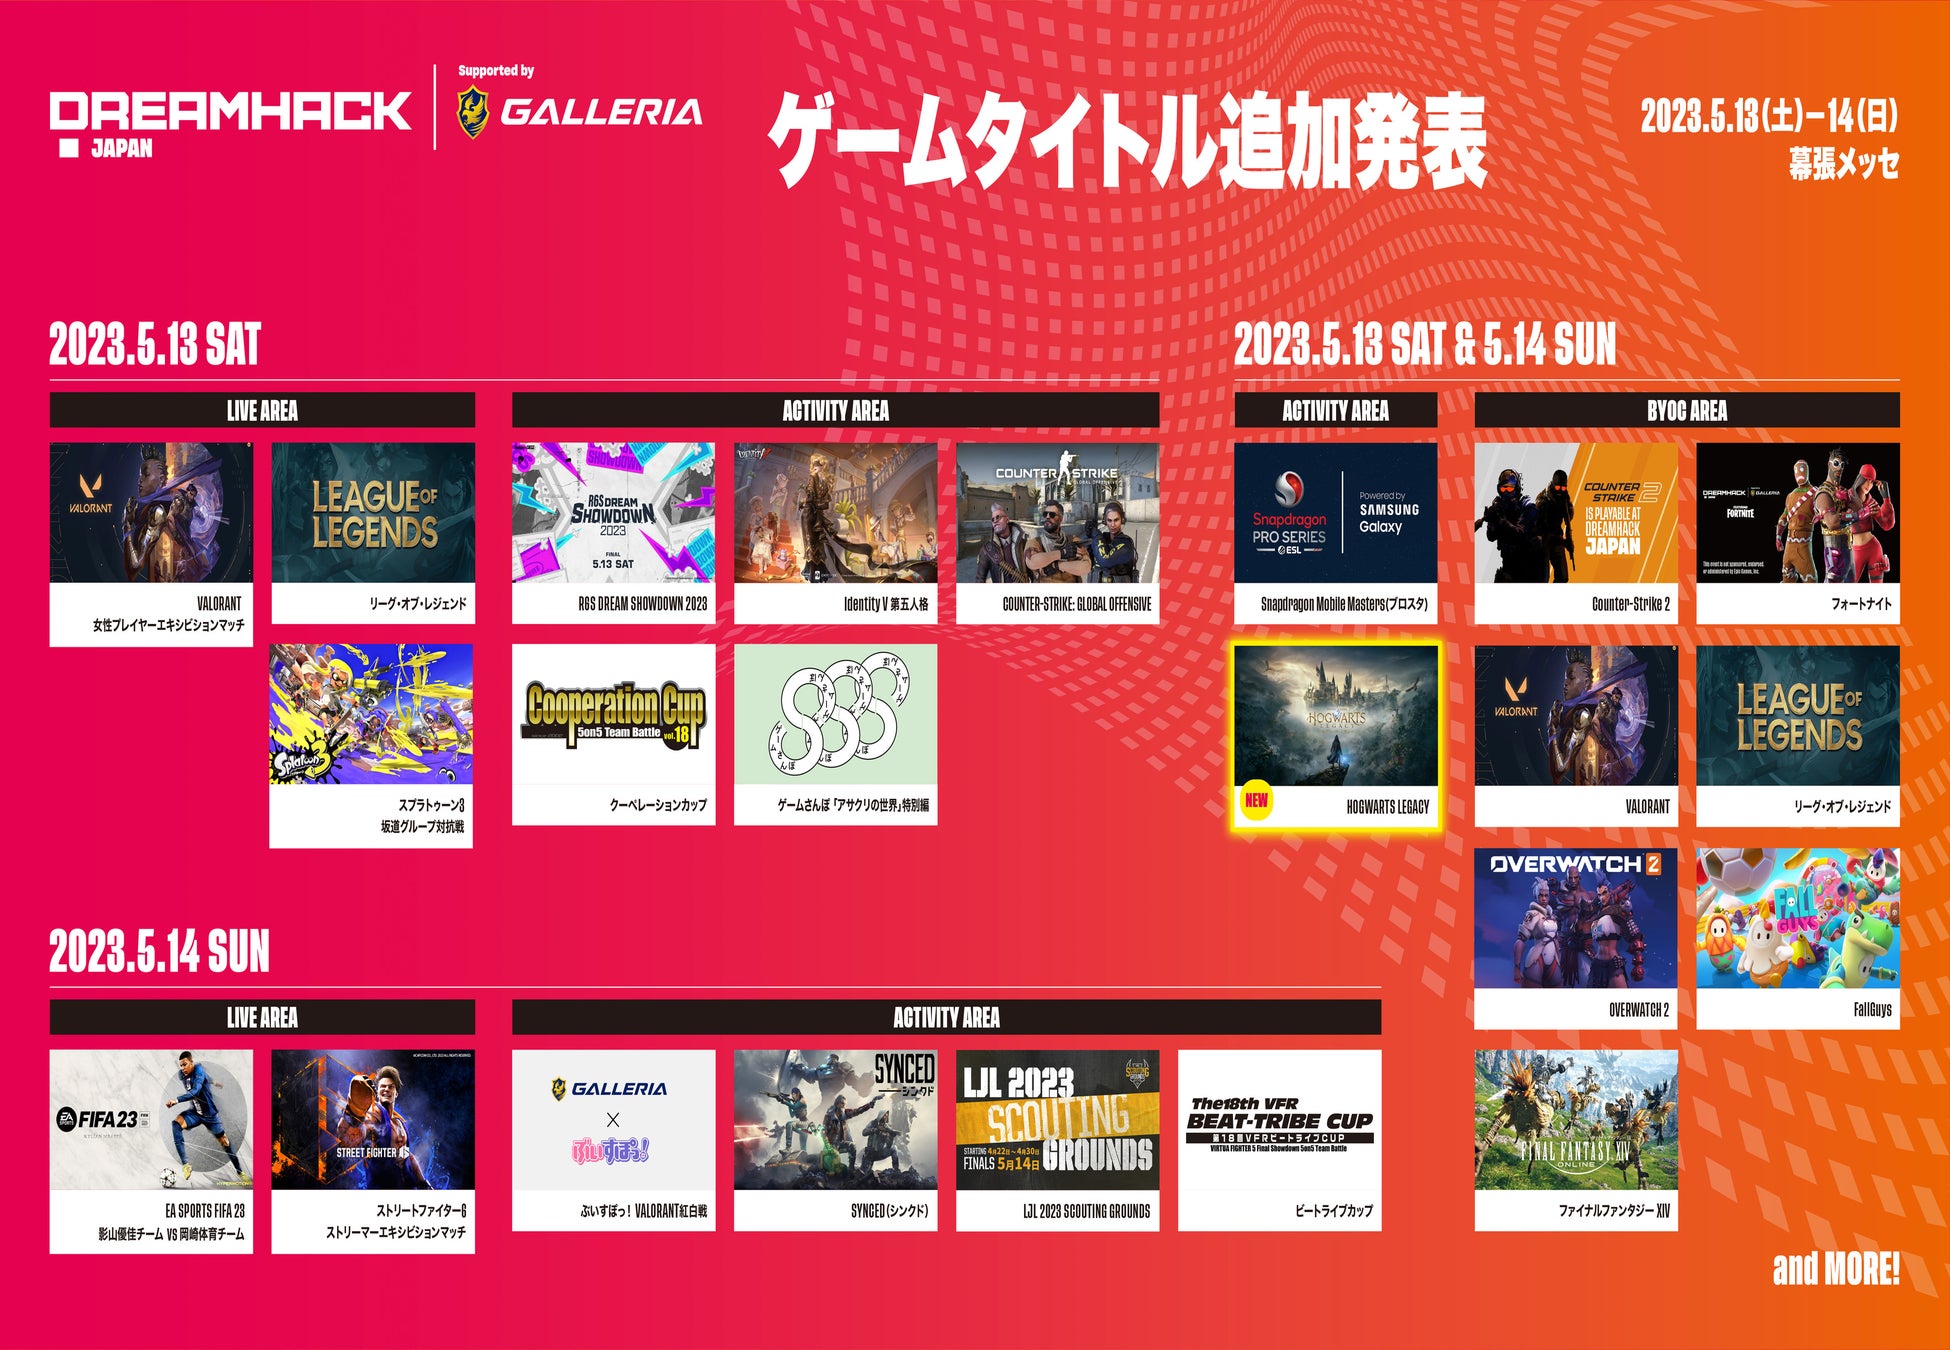 「DreamHack Japan 2023」に新たなゲームステージ企画や出演アーティストが追加！『レインボーシックス シージ』決勝戦の対戦カードも発表。西銘駿もスペシャルゲストとして登場予定。